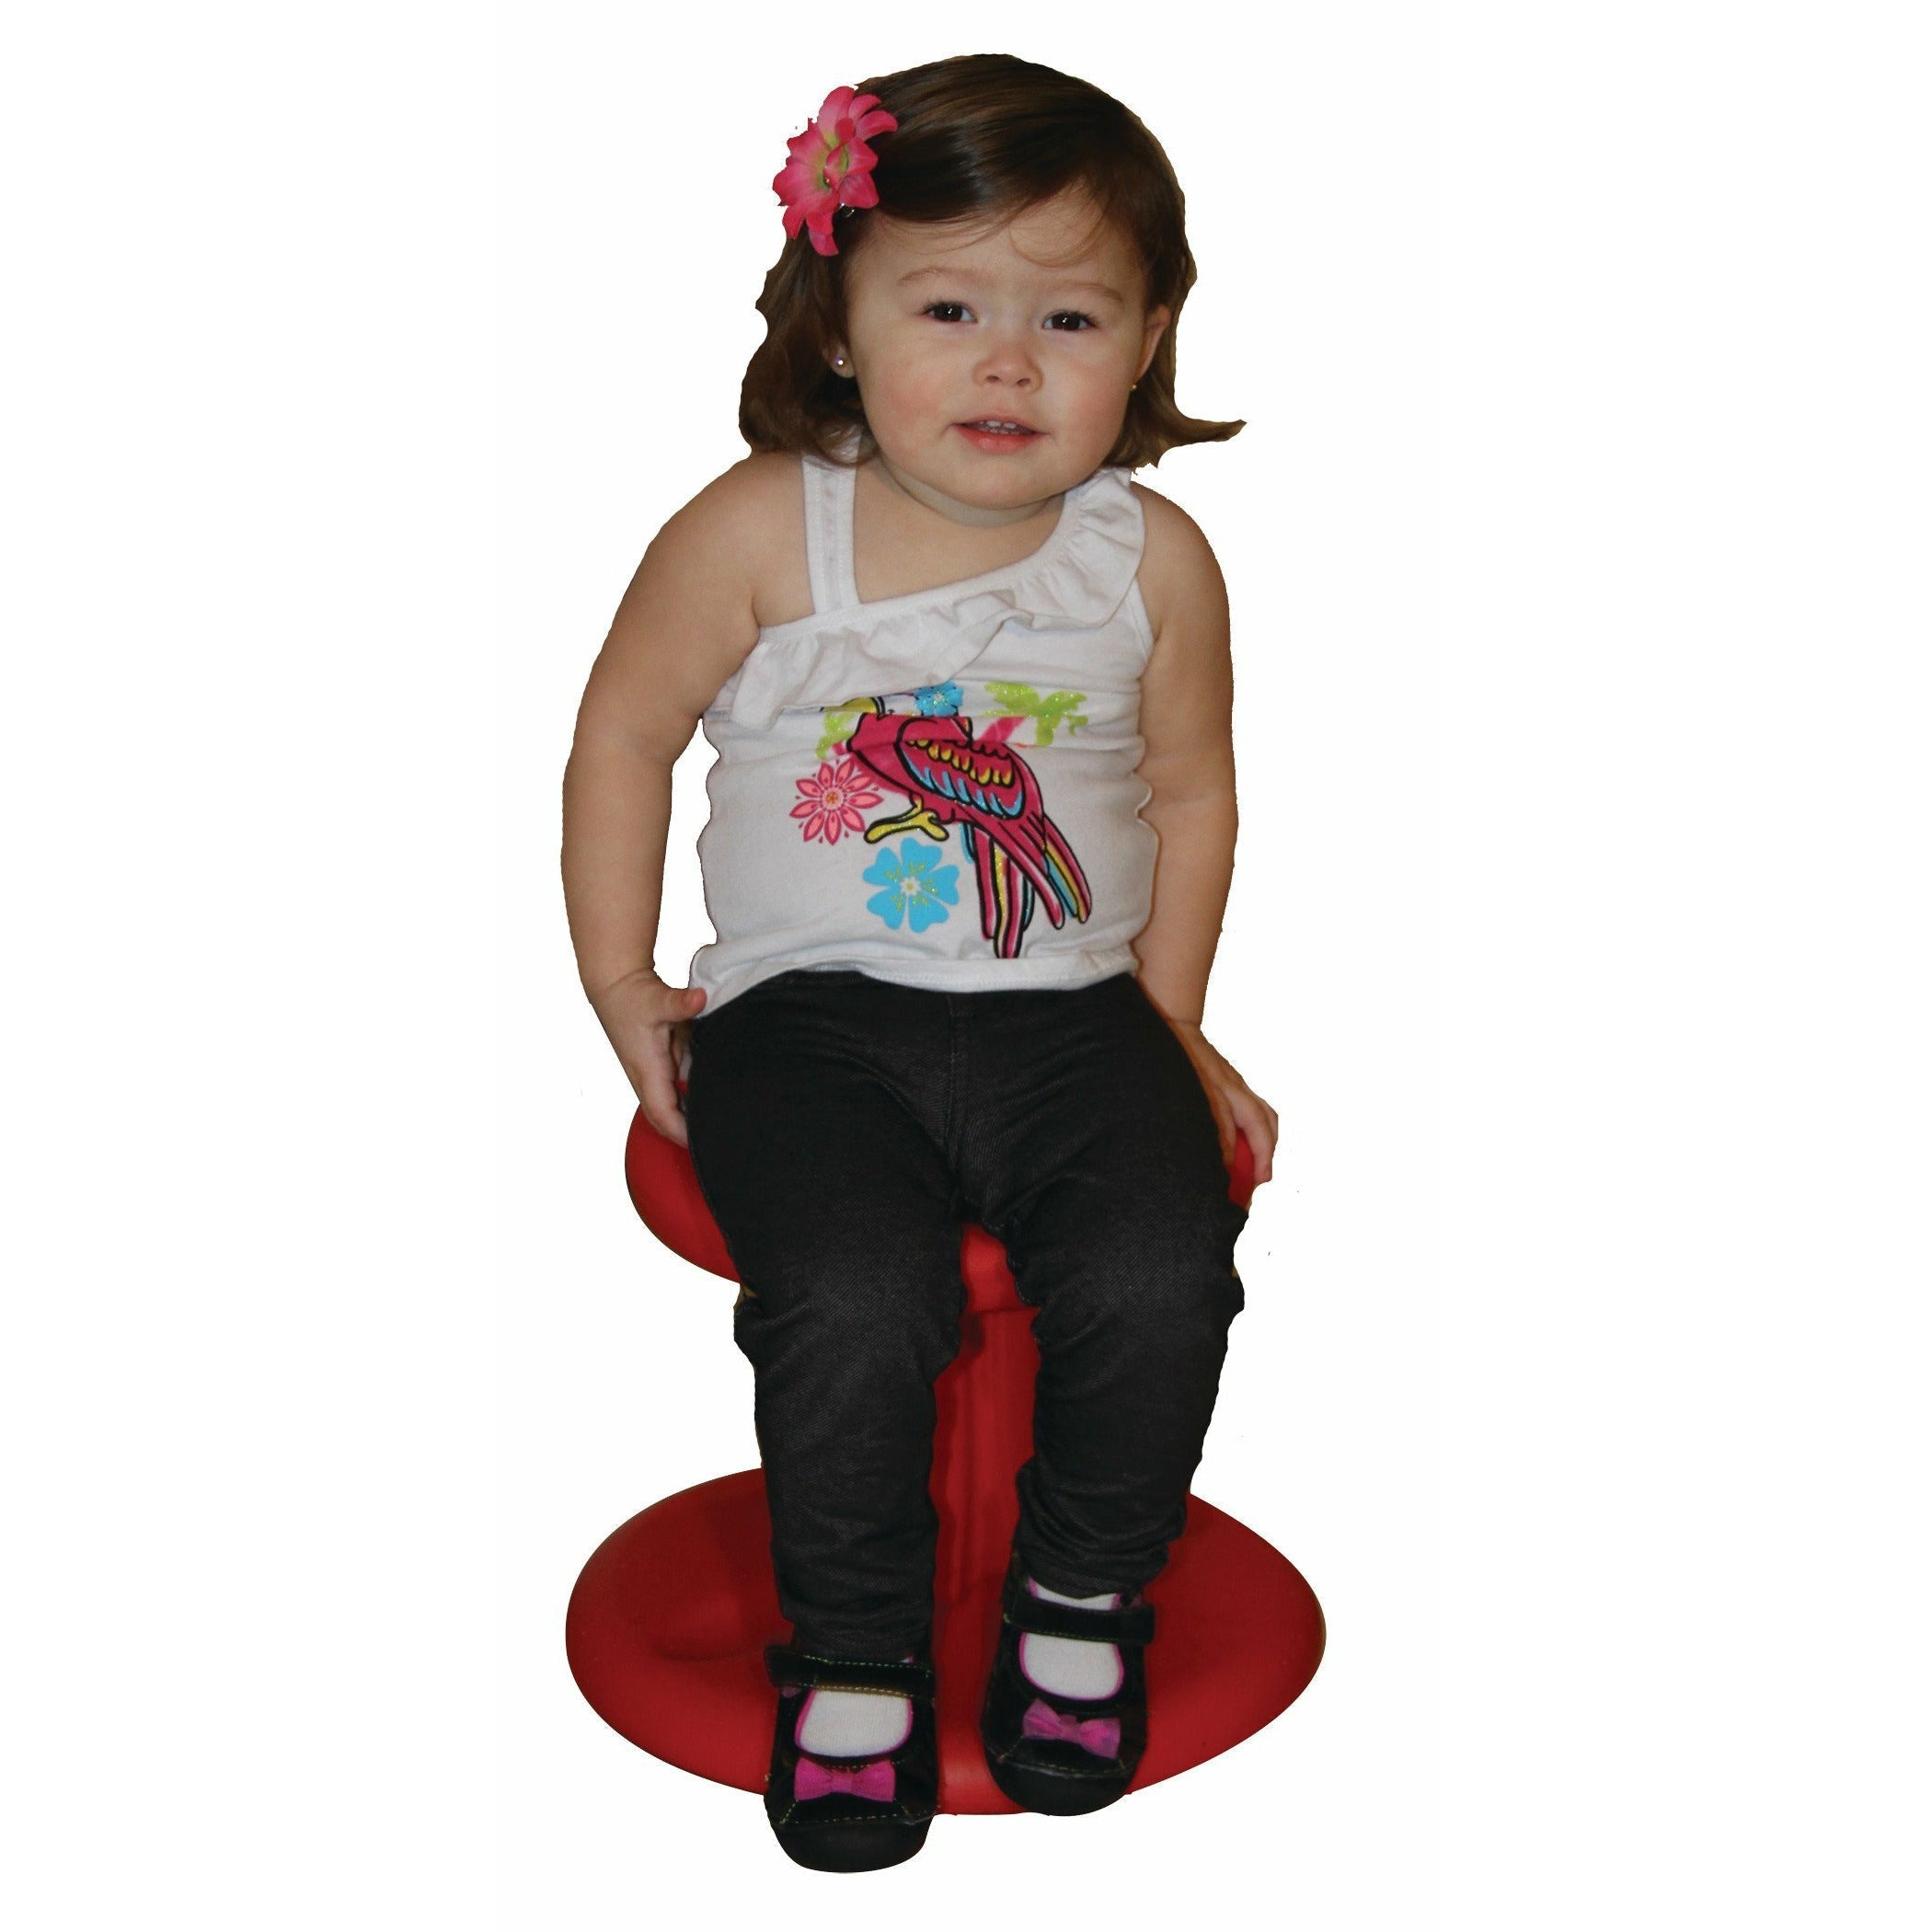 Kore™ Toddler 10" Wobble Chair